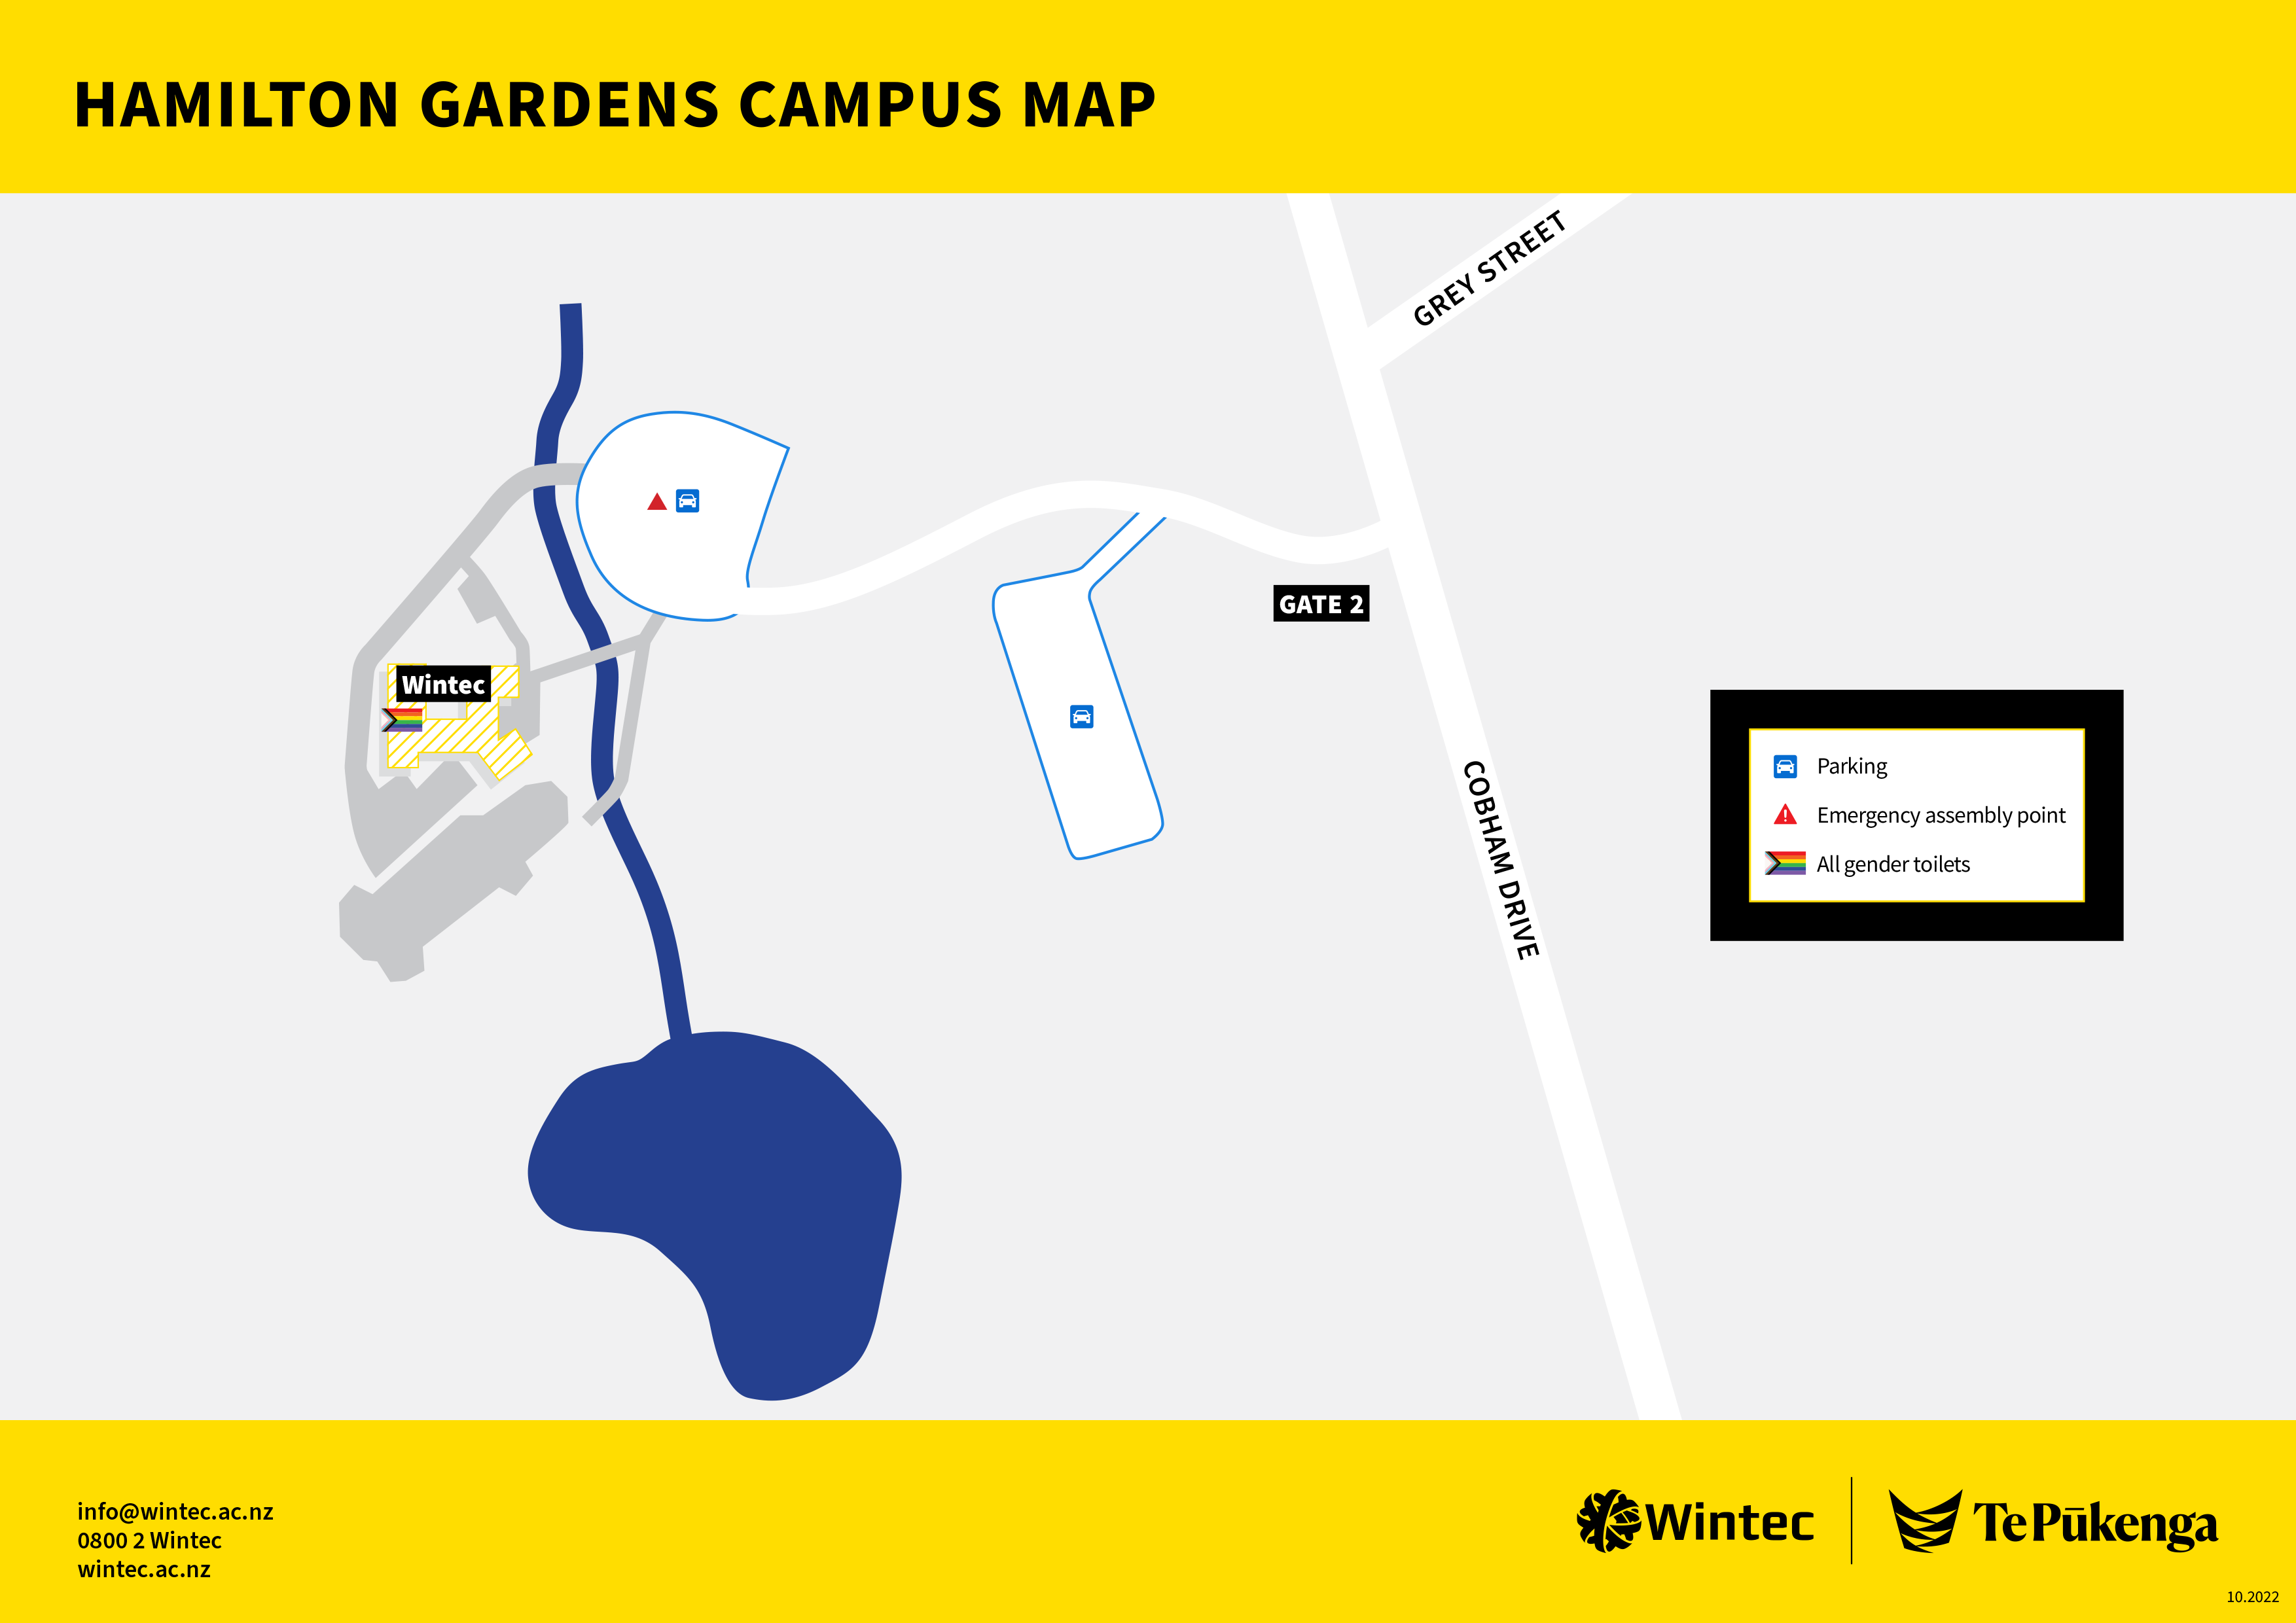 Hamilton gardens campus map